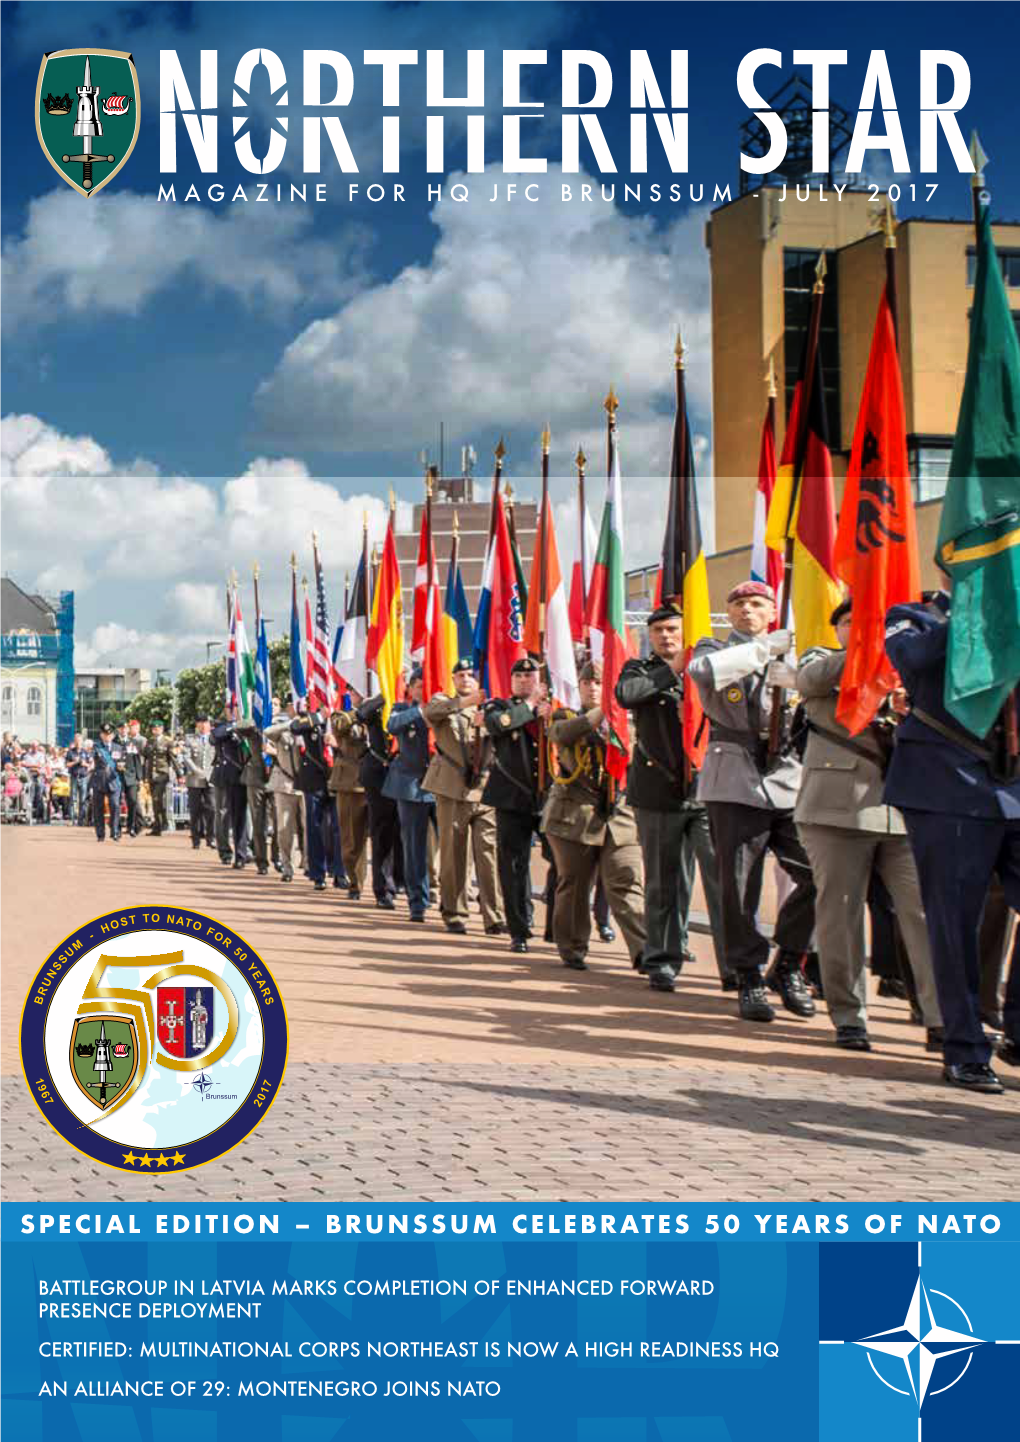 Brunssum Celebrates 50 Years of Nato